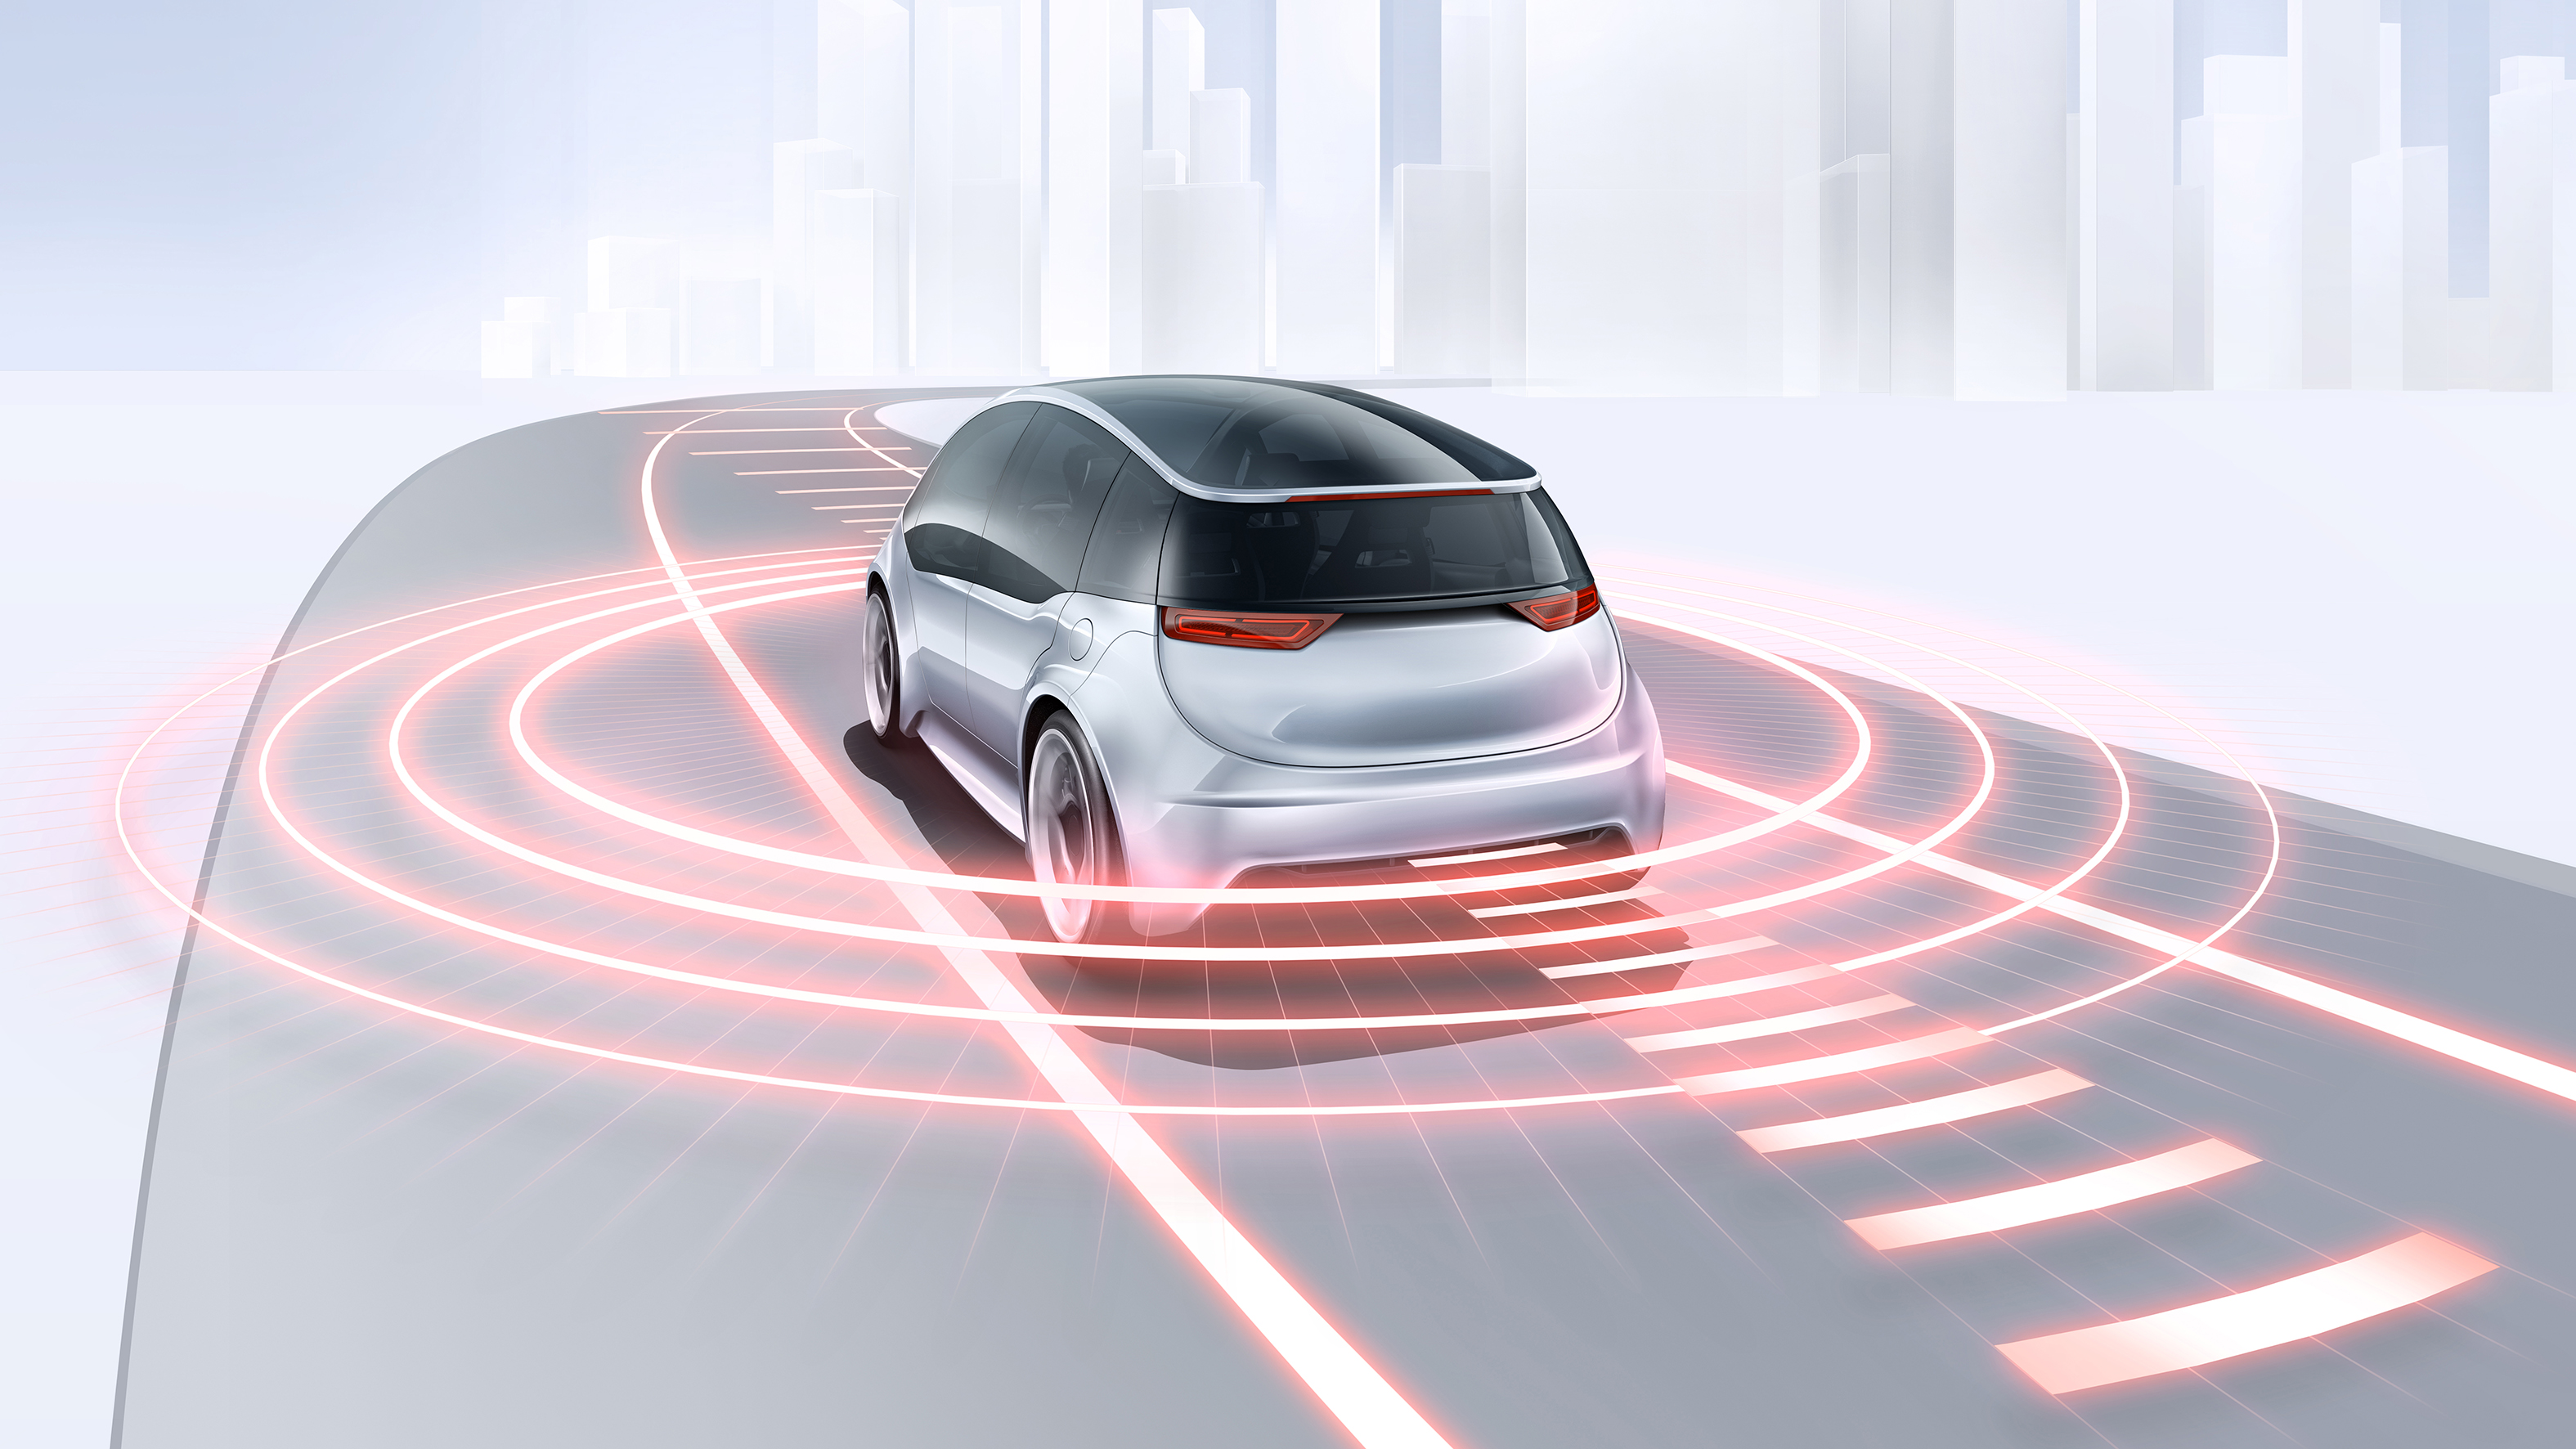 Bosch has Started Mass Producing LiDAR Sensors for Autonomous Cars